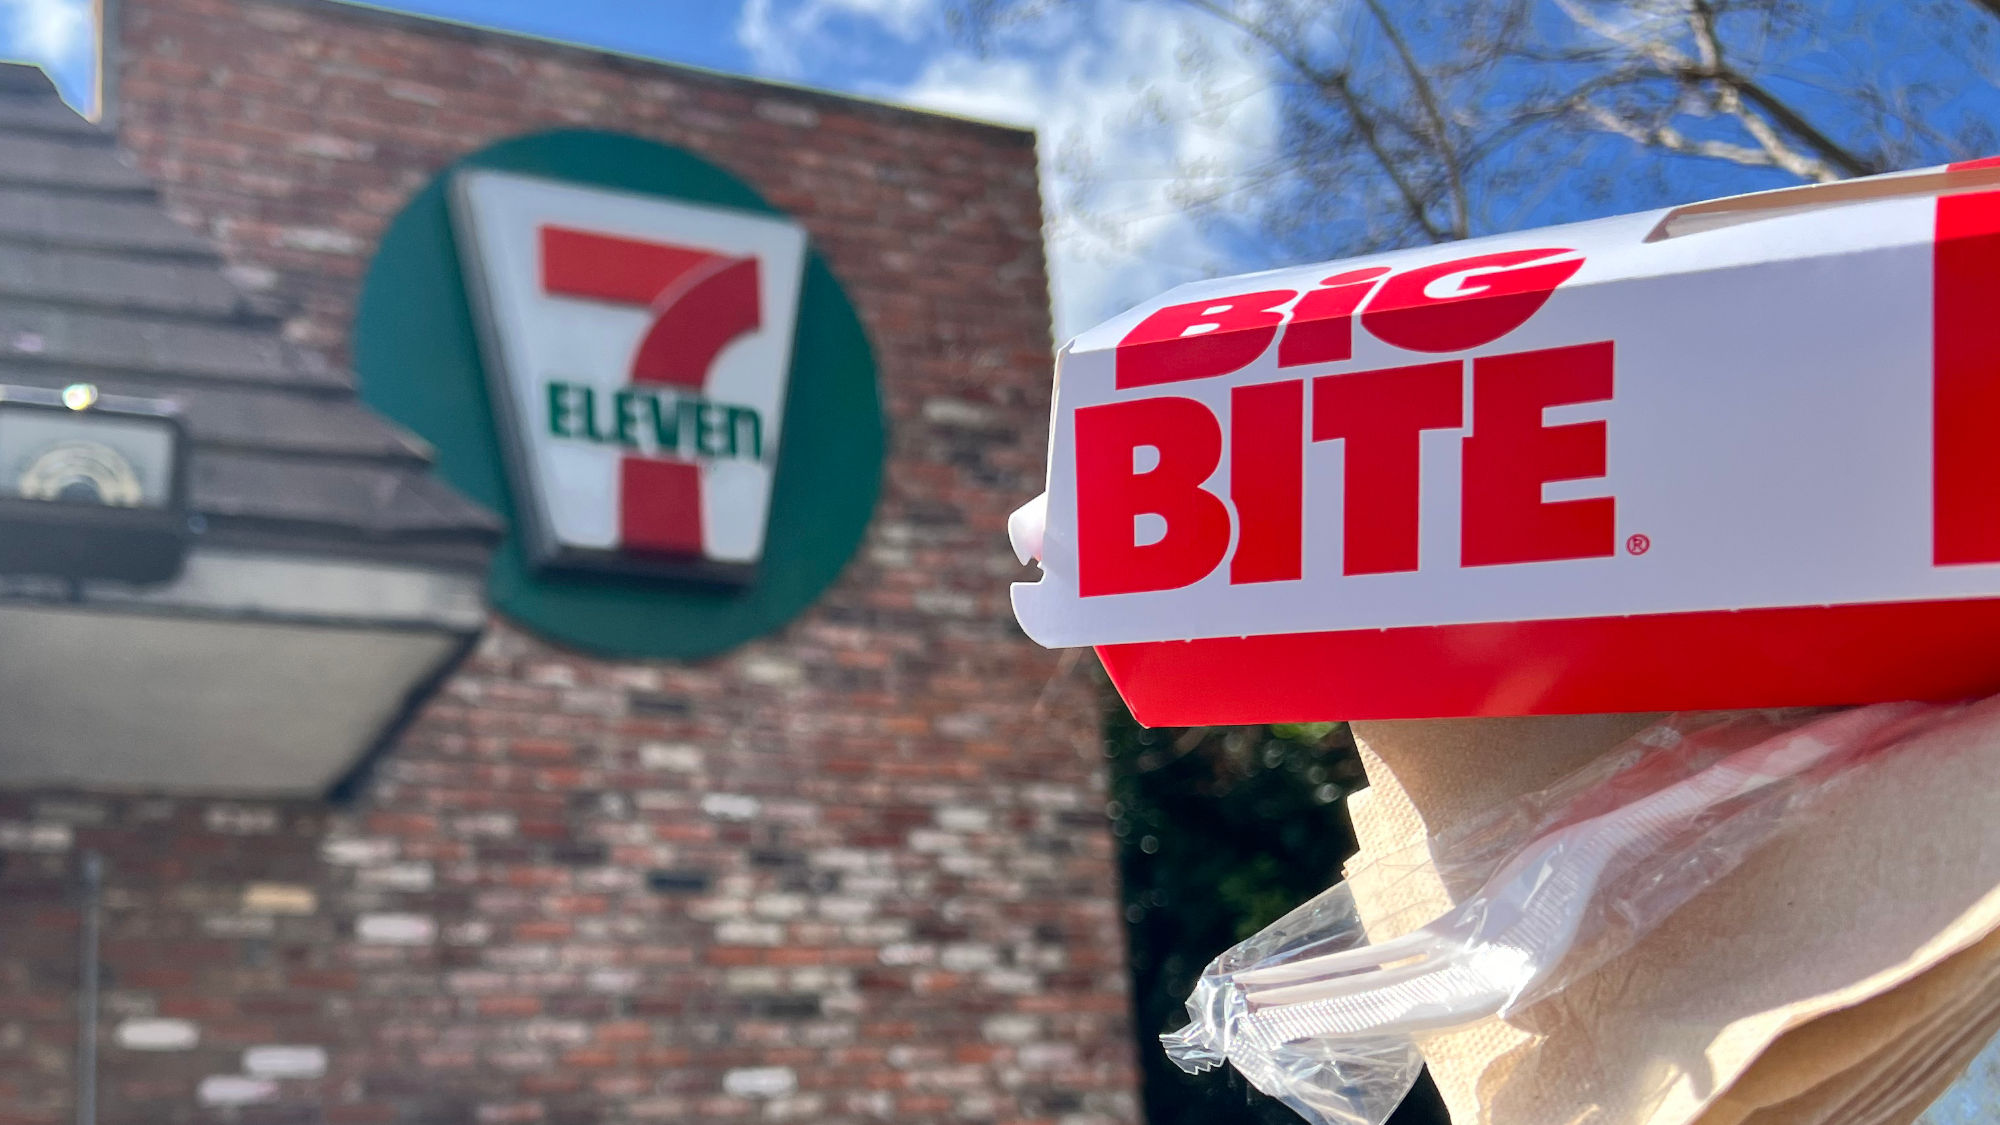 7-Eleven Big Bite